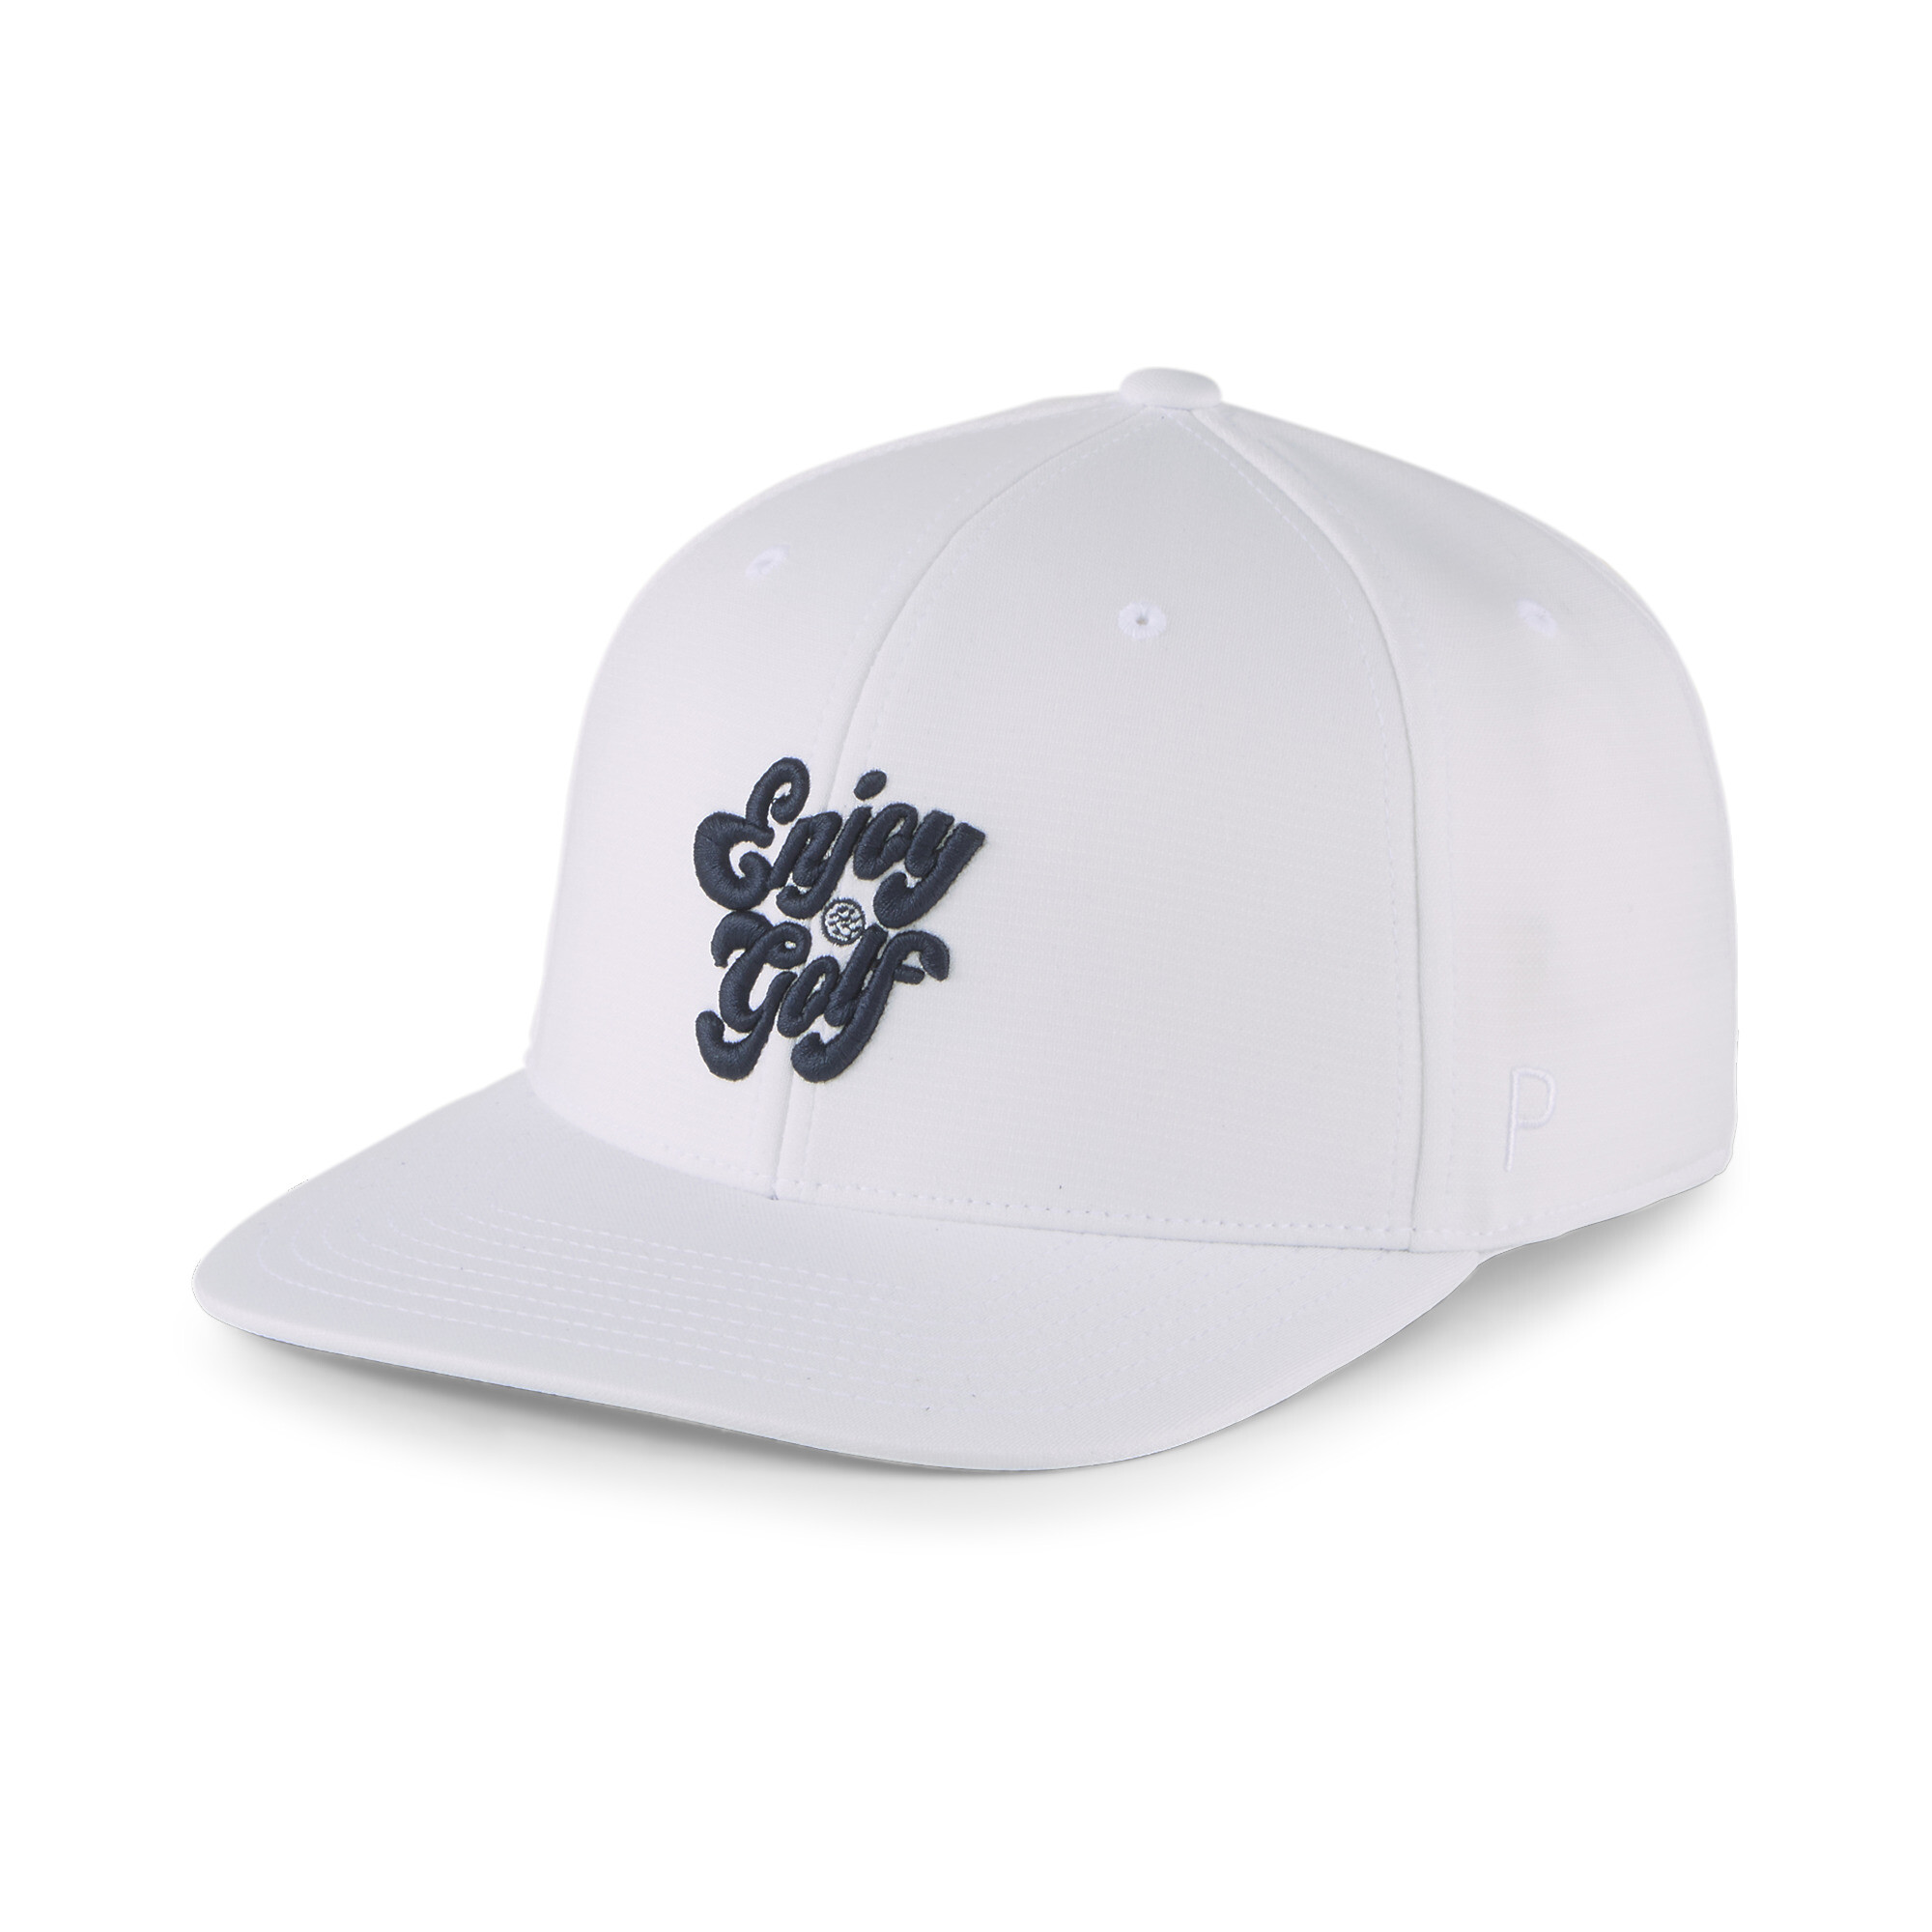 Men's Puma Enjoy Golf Snapback Cap, White, Size Adult, Accessories